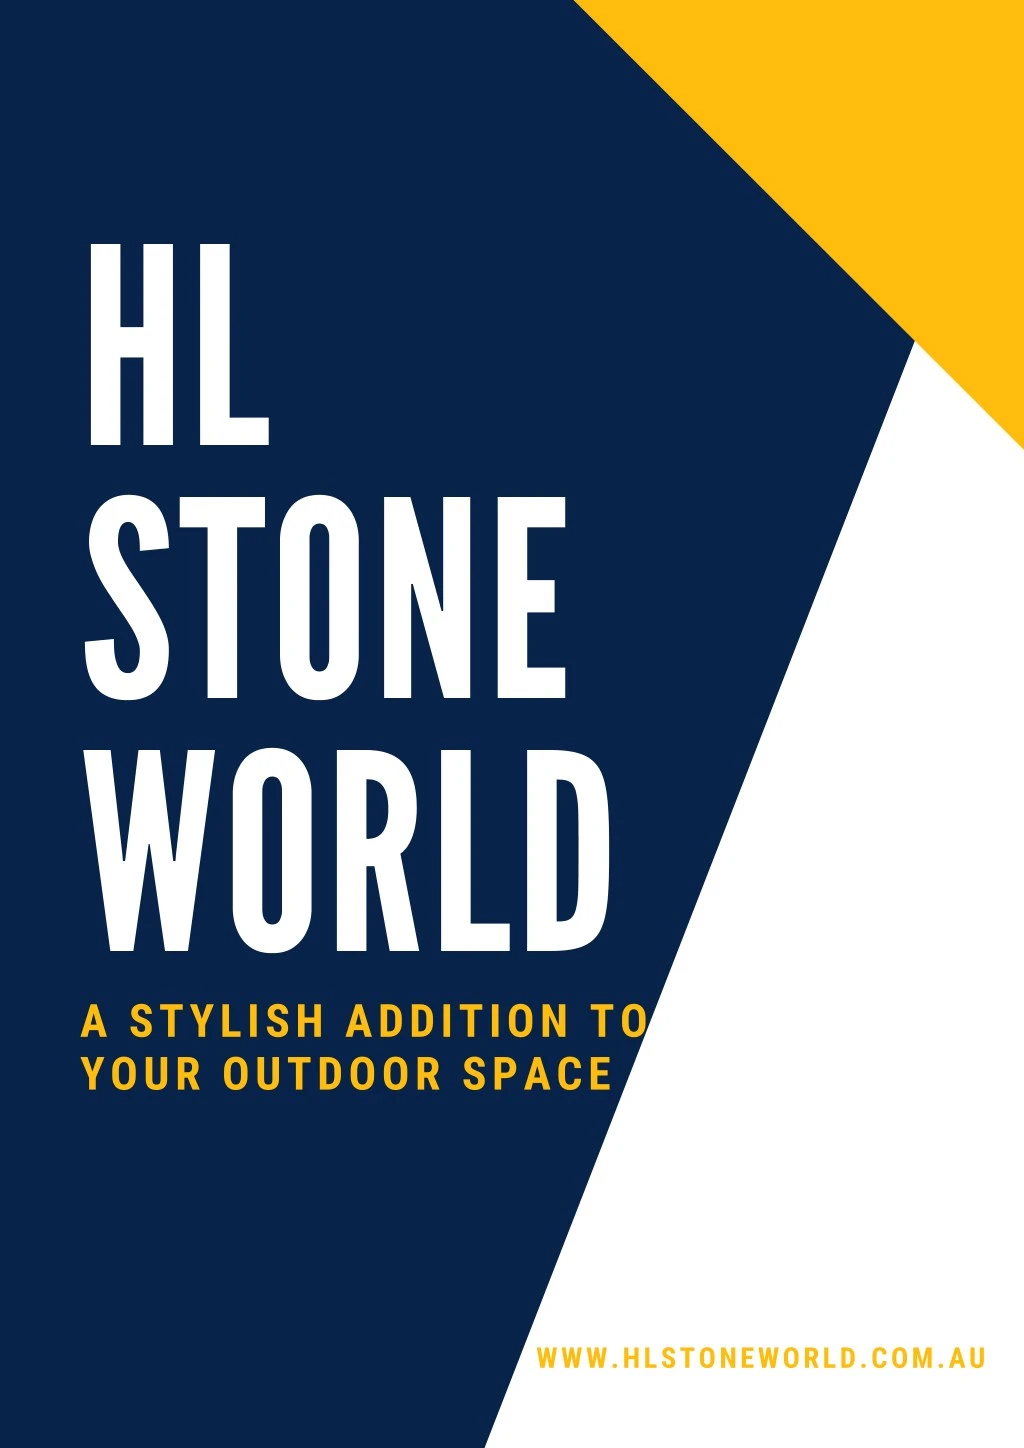 hl stone world